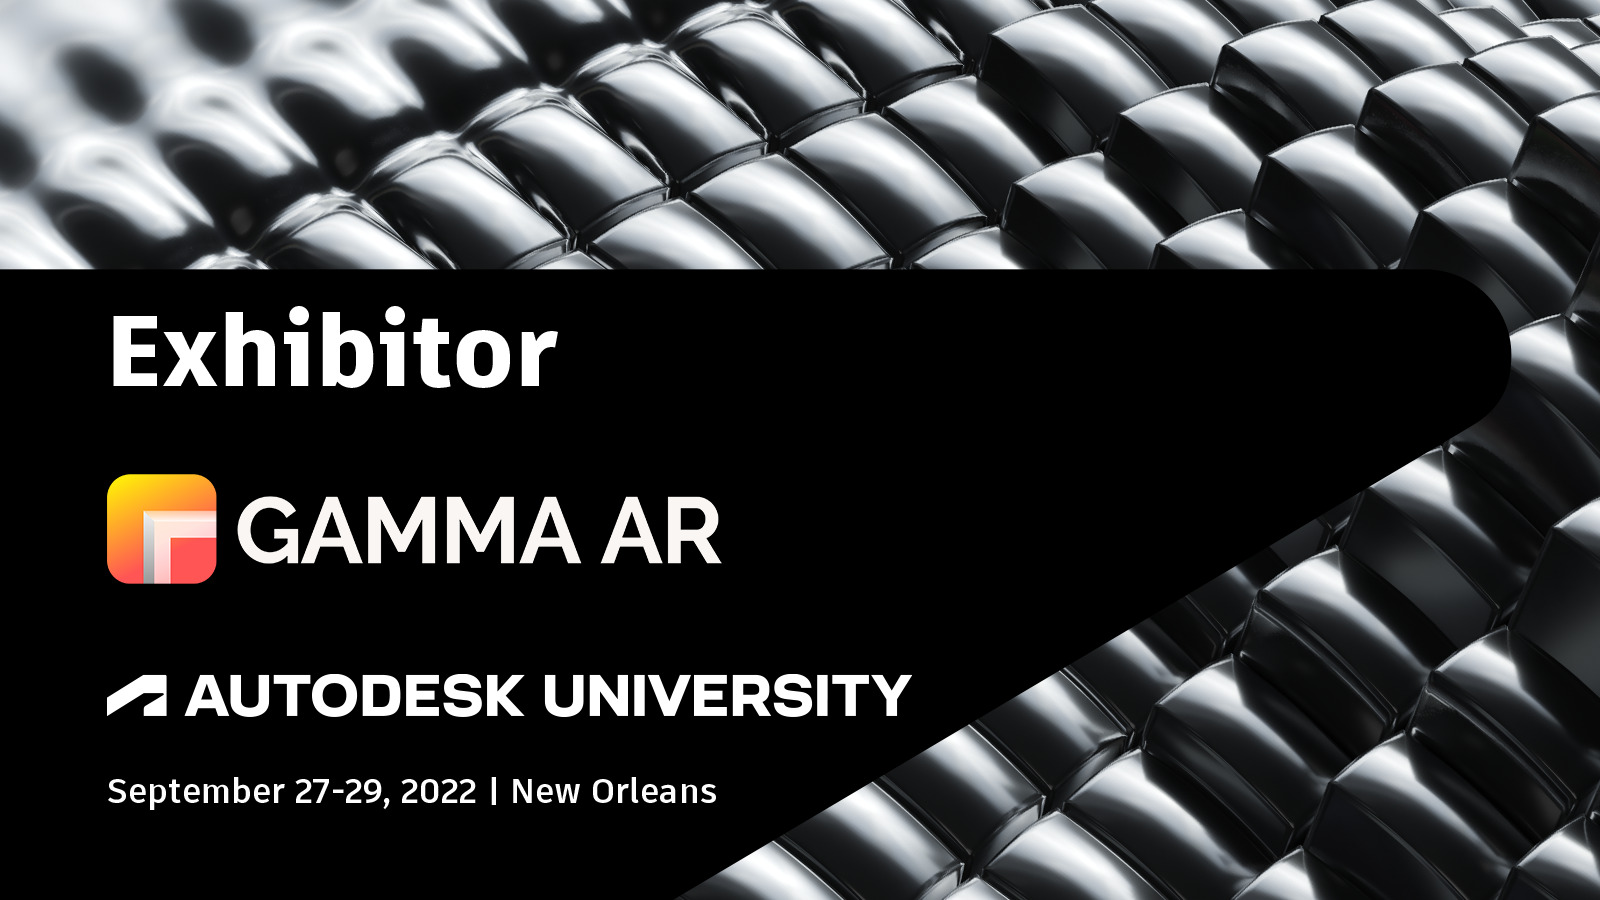 GAMMA AR at Autodesk University 2022